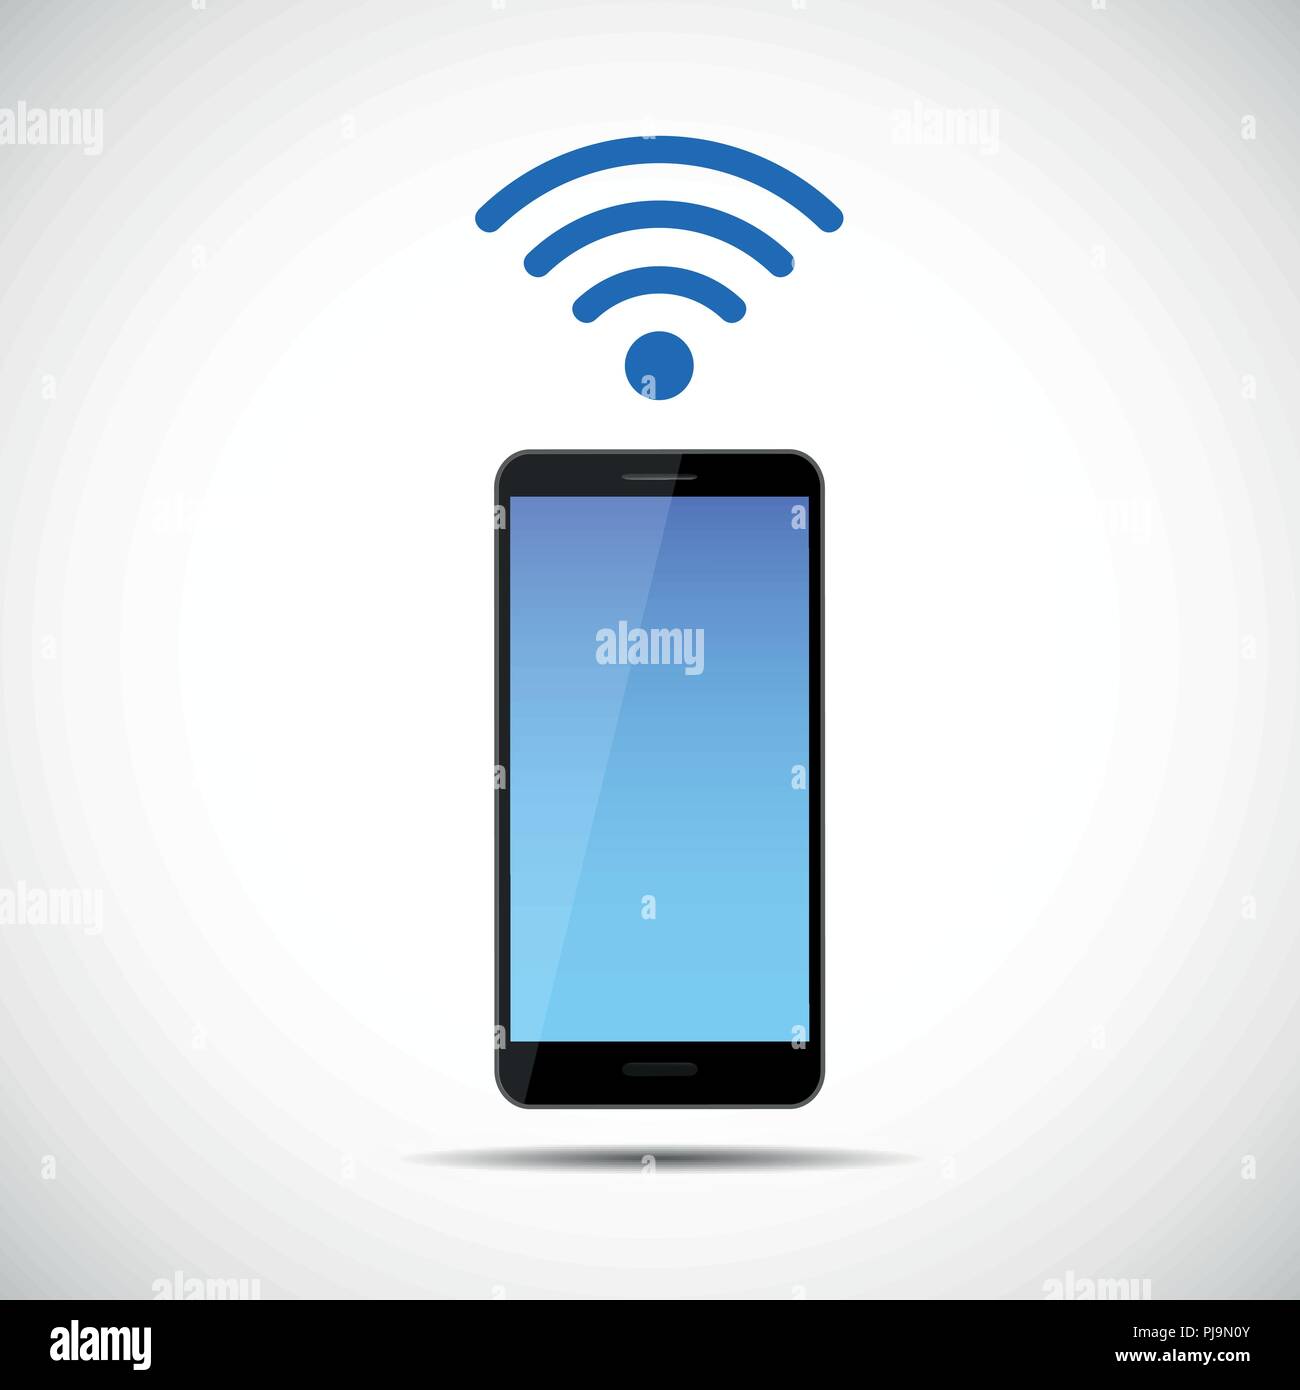 free wi-fi symbol smartphone mobile phone vector illustration EPS10 Stock Vector